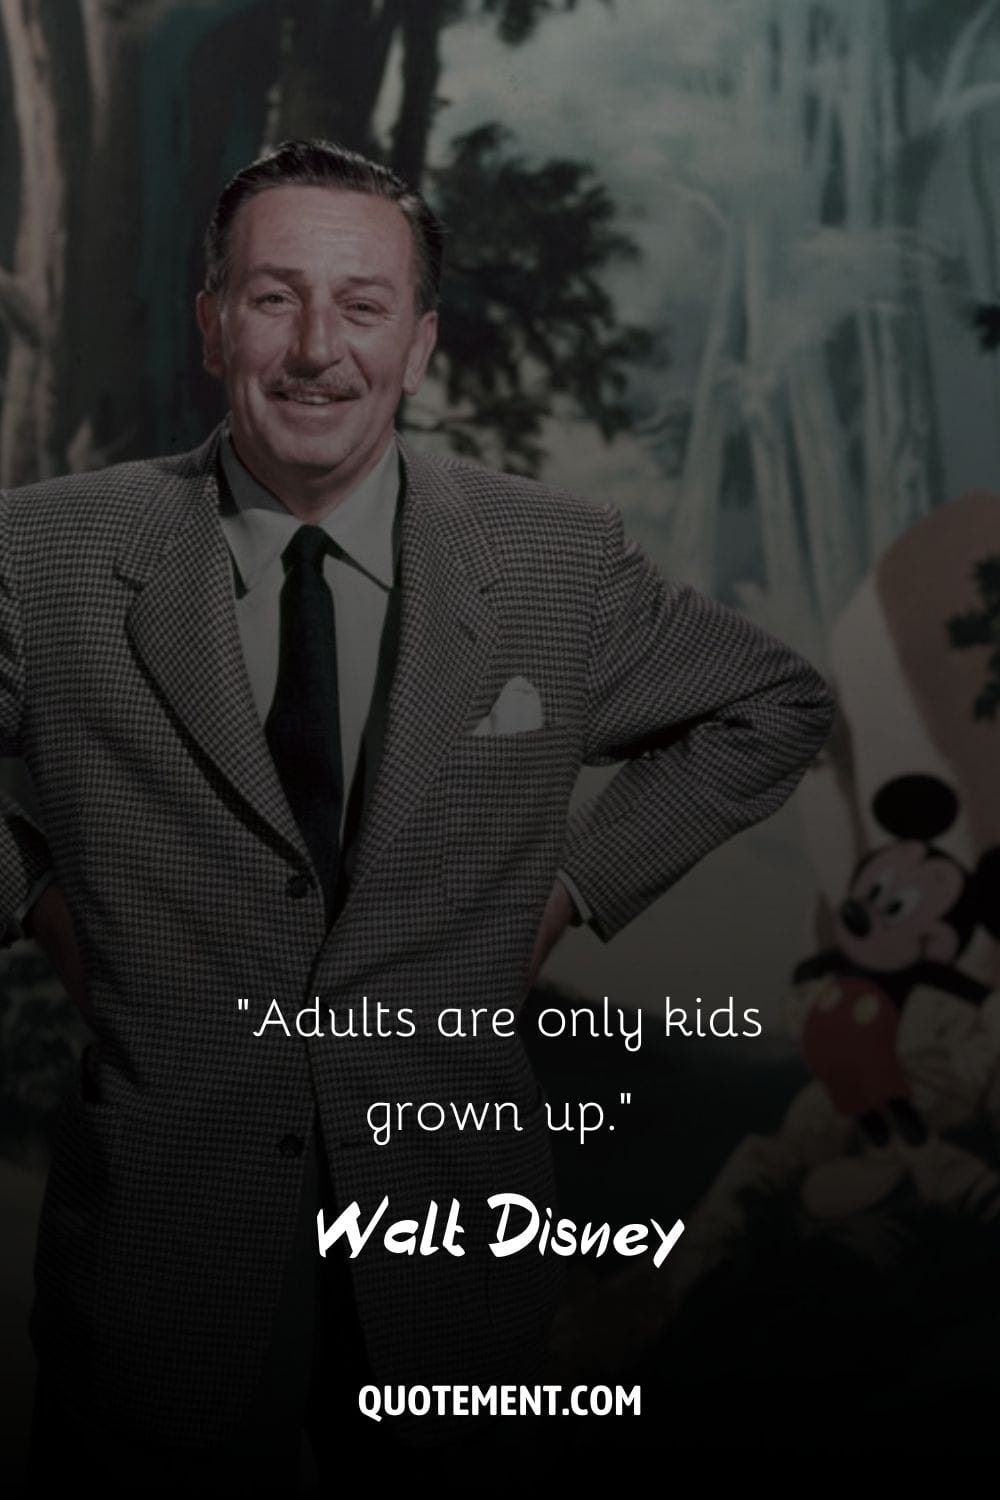 Walt Disney's enduring smile preserved in photograph.